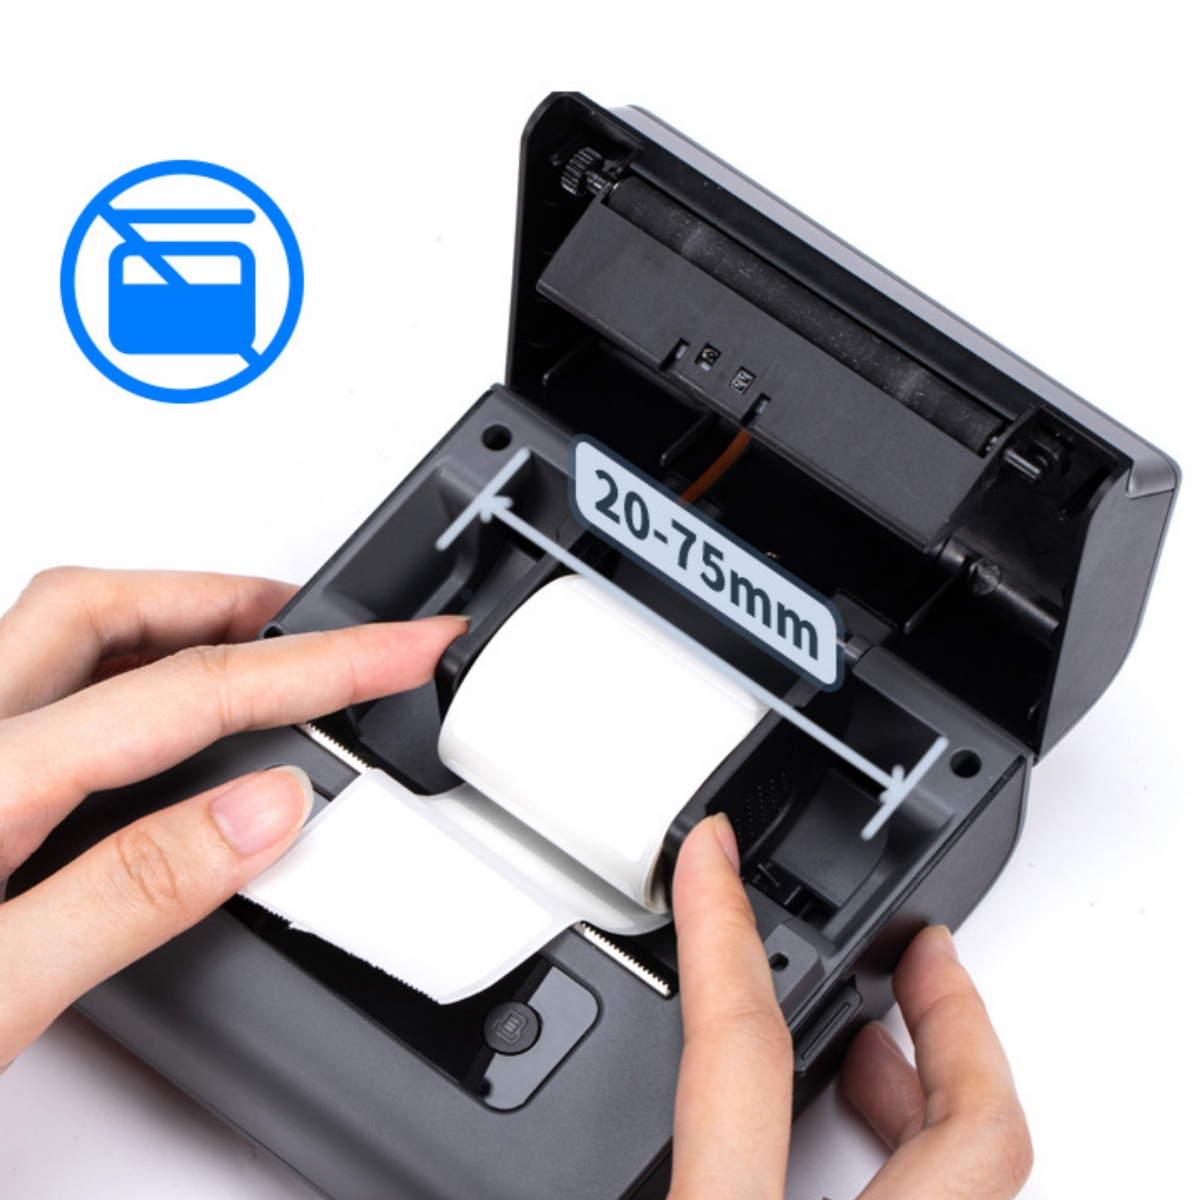 SHAOKE Etikettendrucker kommerzieller Preis bluetooth drucker Etikettendrucker Thermopapier thermodrucker smart barcode